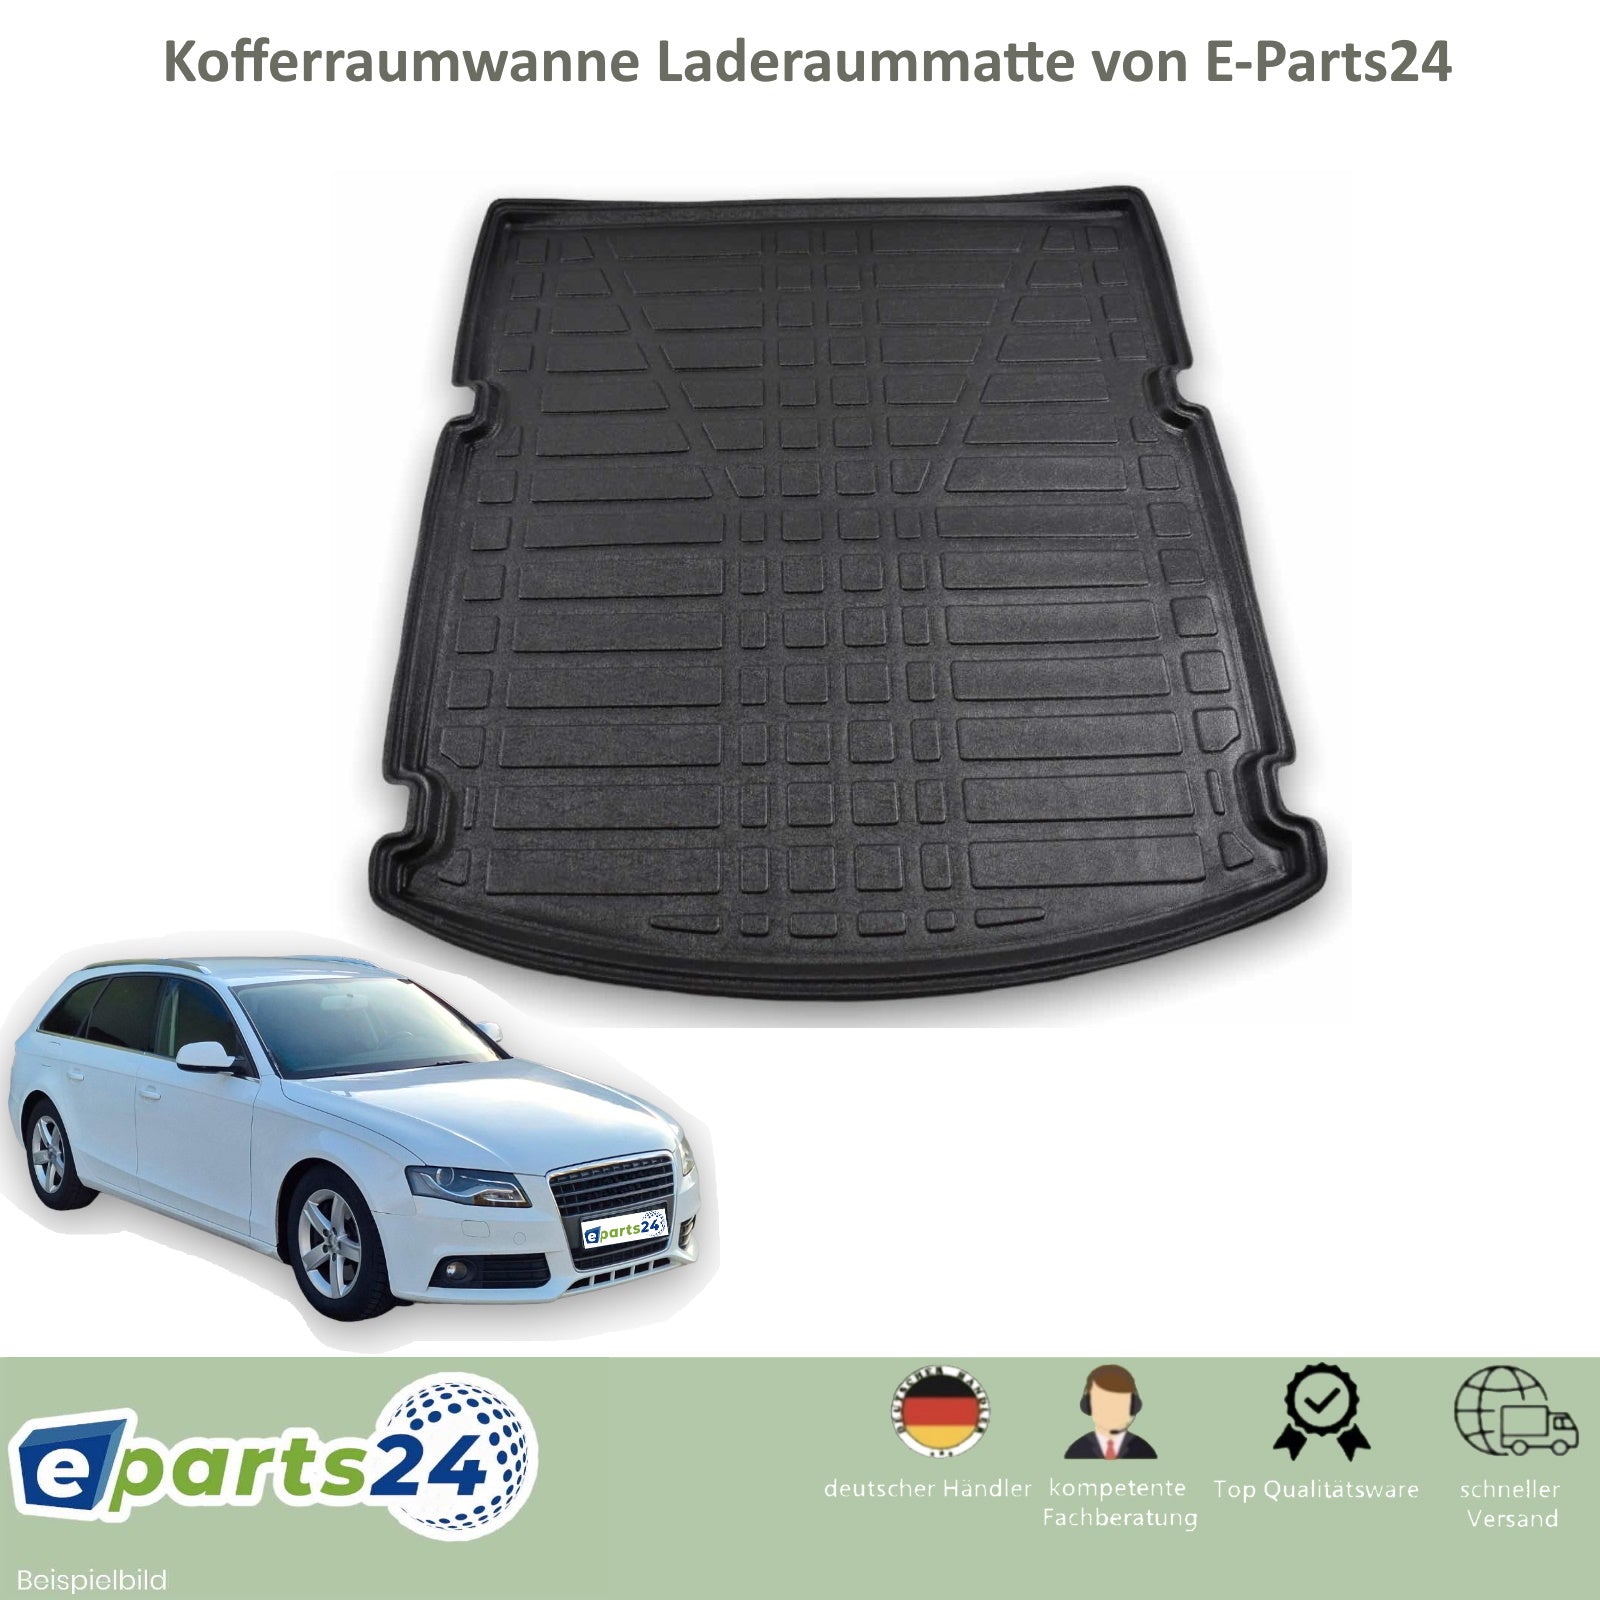 Kofferraumwanne Kofferraummatte Laderaumwanne für Audi A4 B8 Avant 200 –  E-Parts24